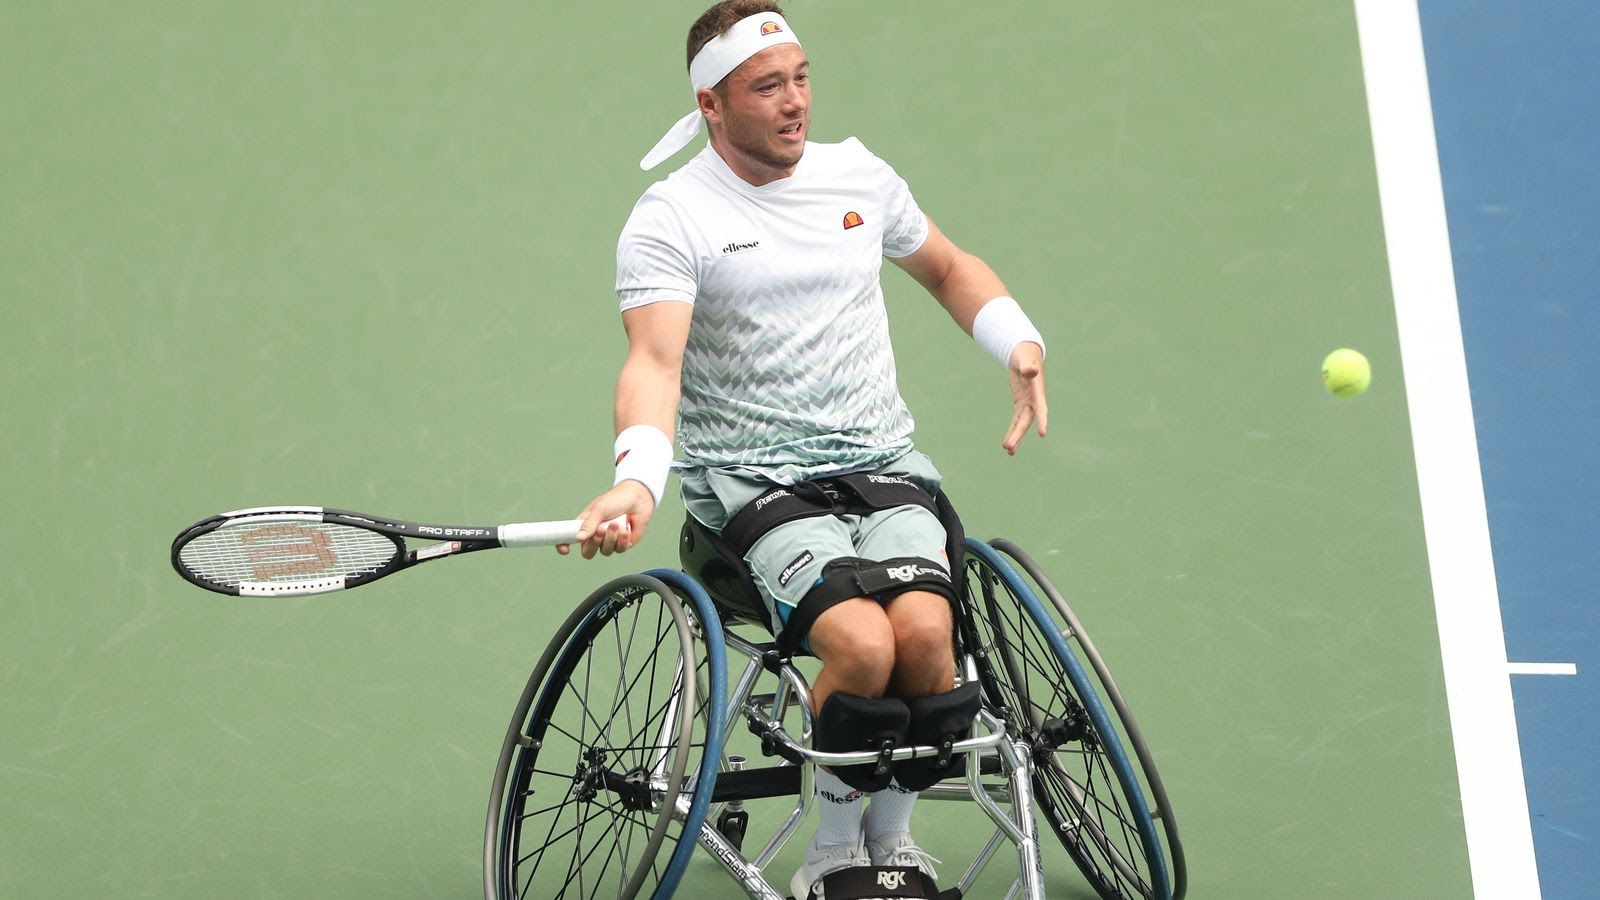 Wheelchair Tennis: Alfie Hewett allowed to continue competing